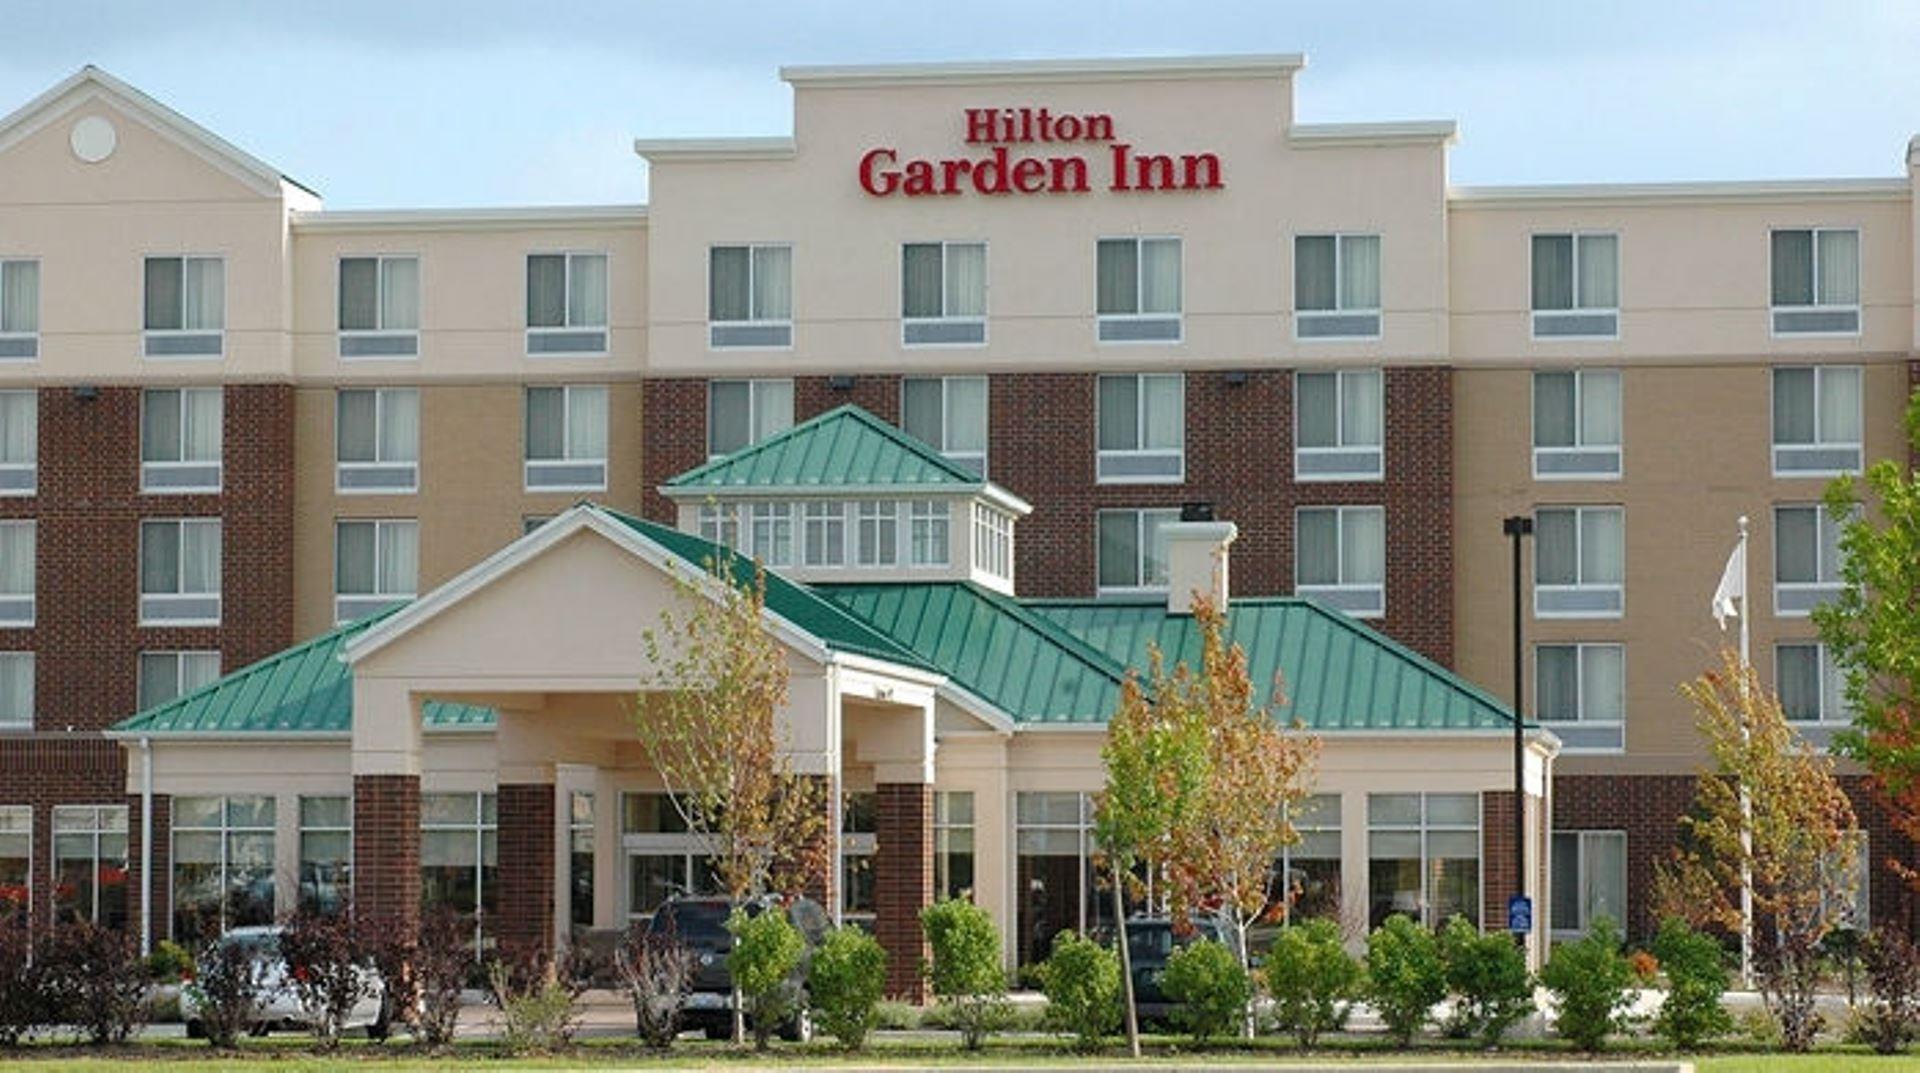 Hilton Garden Inn Naperville/Warrenville in Warrenville, IL